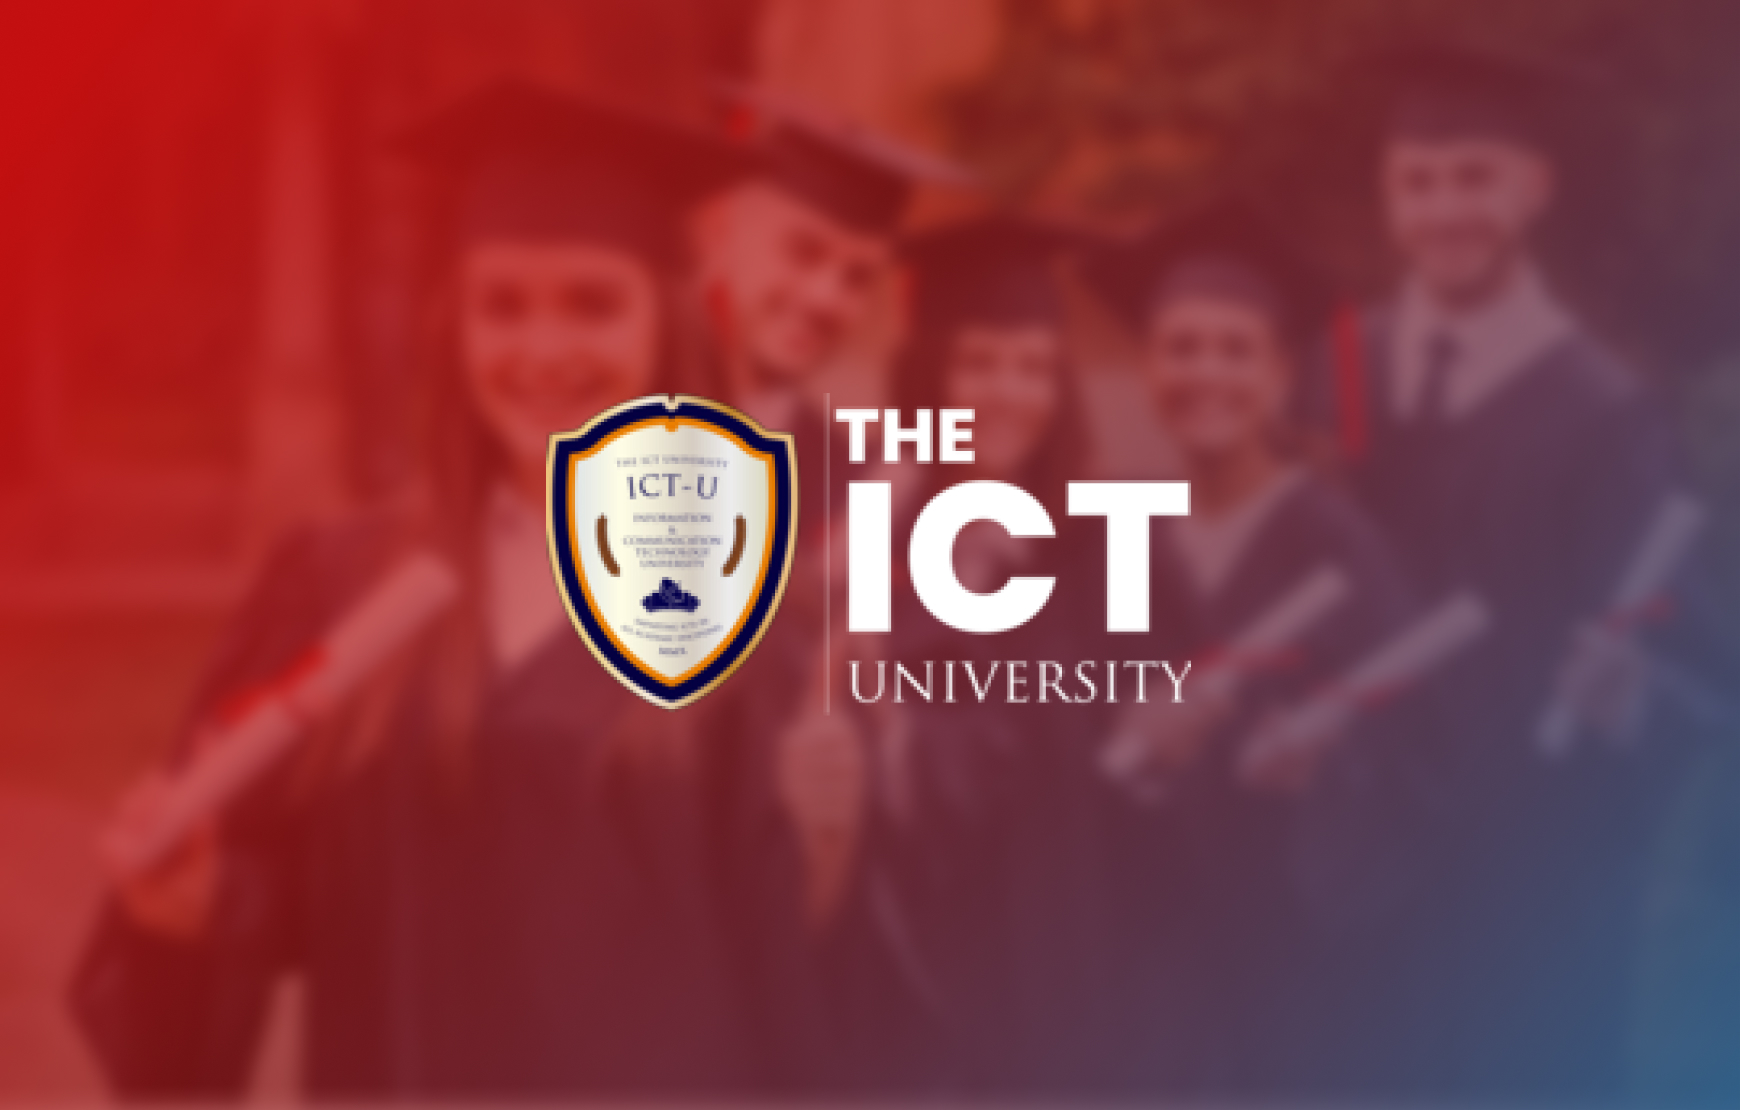 Facilitate Student Management through SuiteCRM WordPress Portal for ICT University.